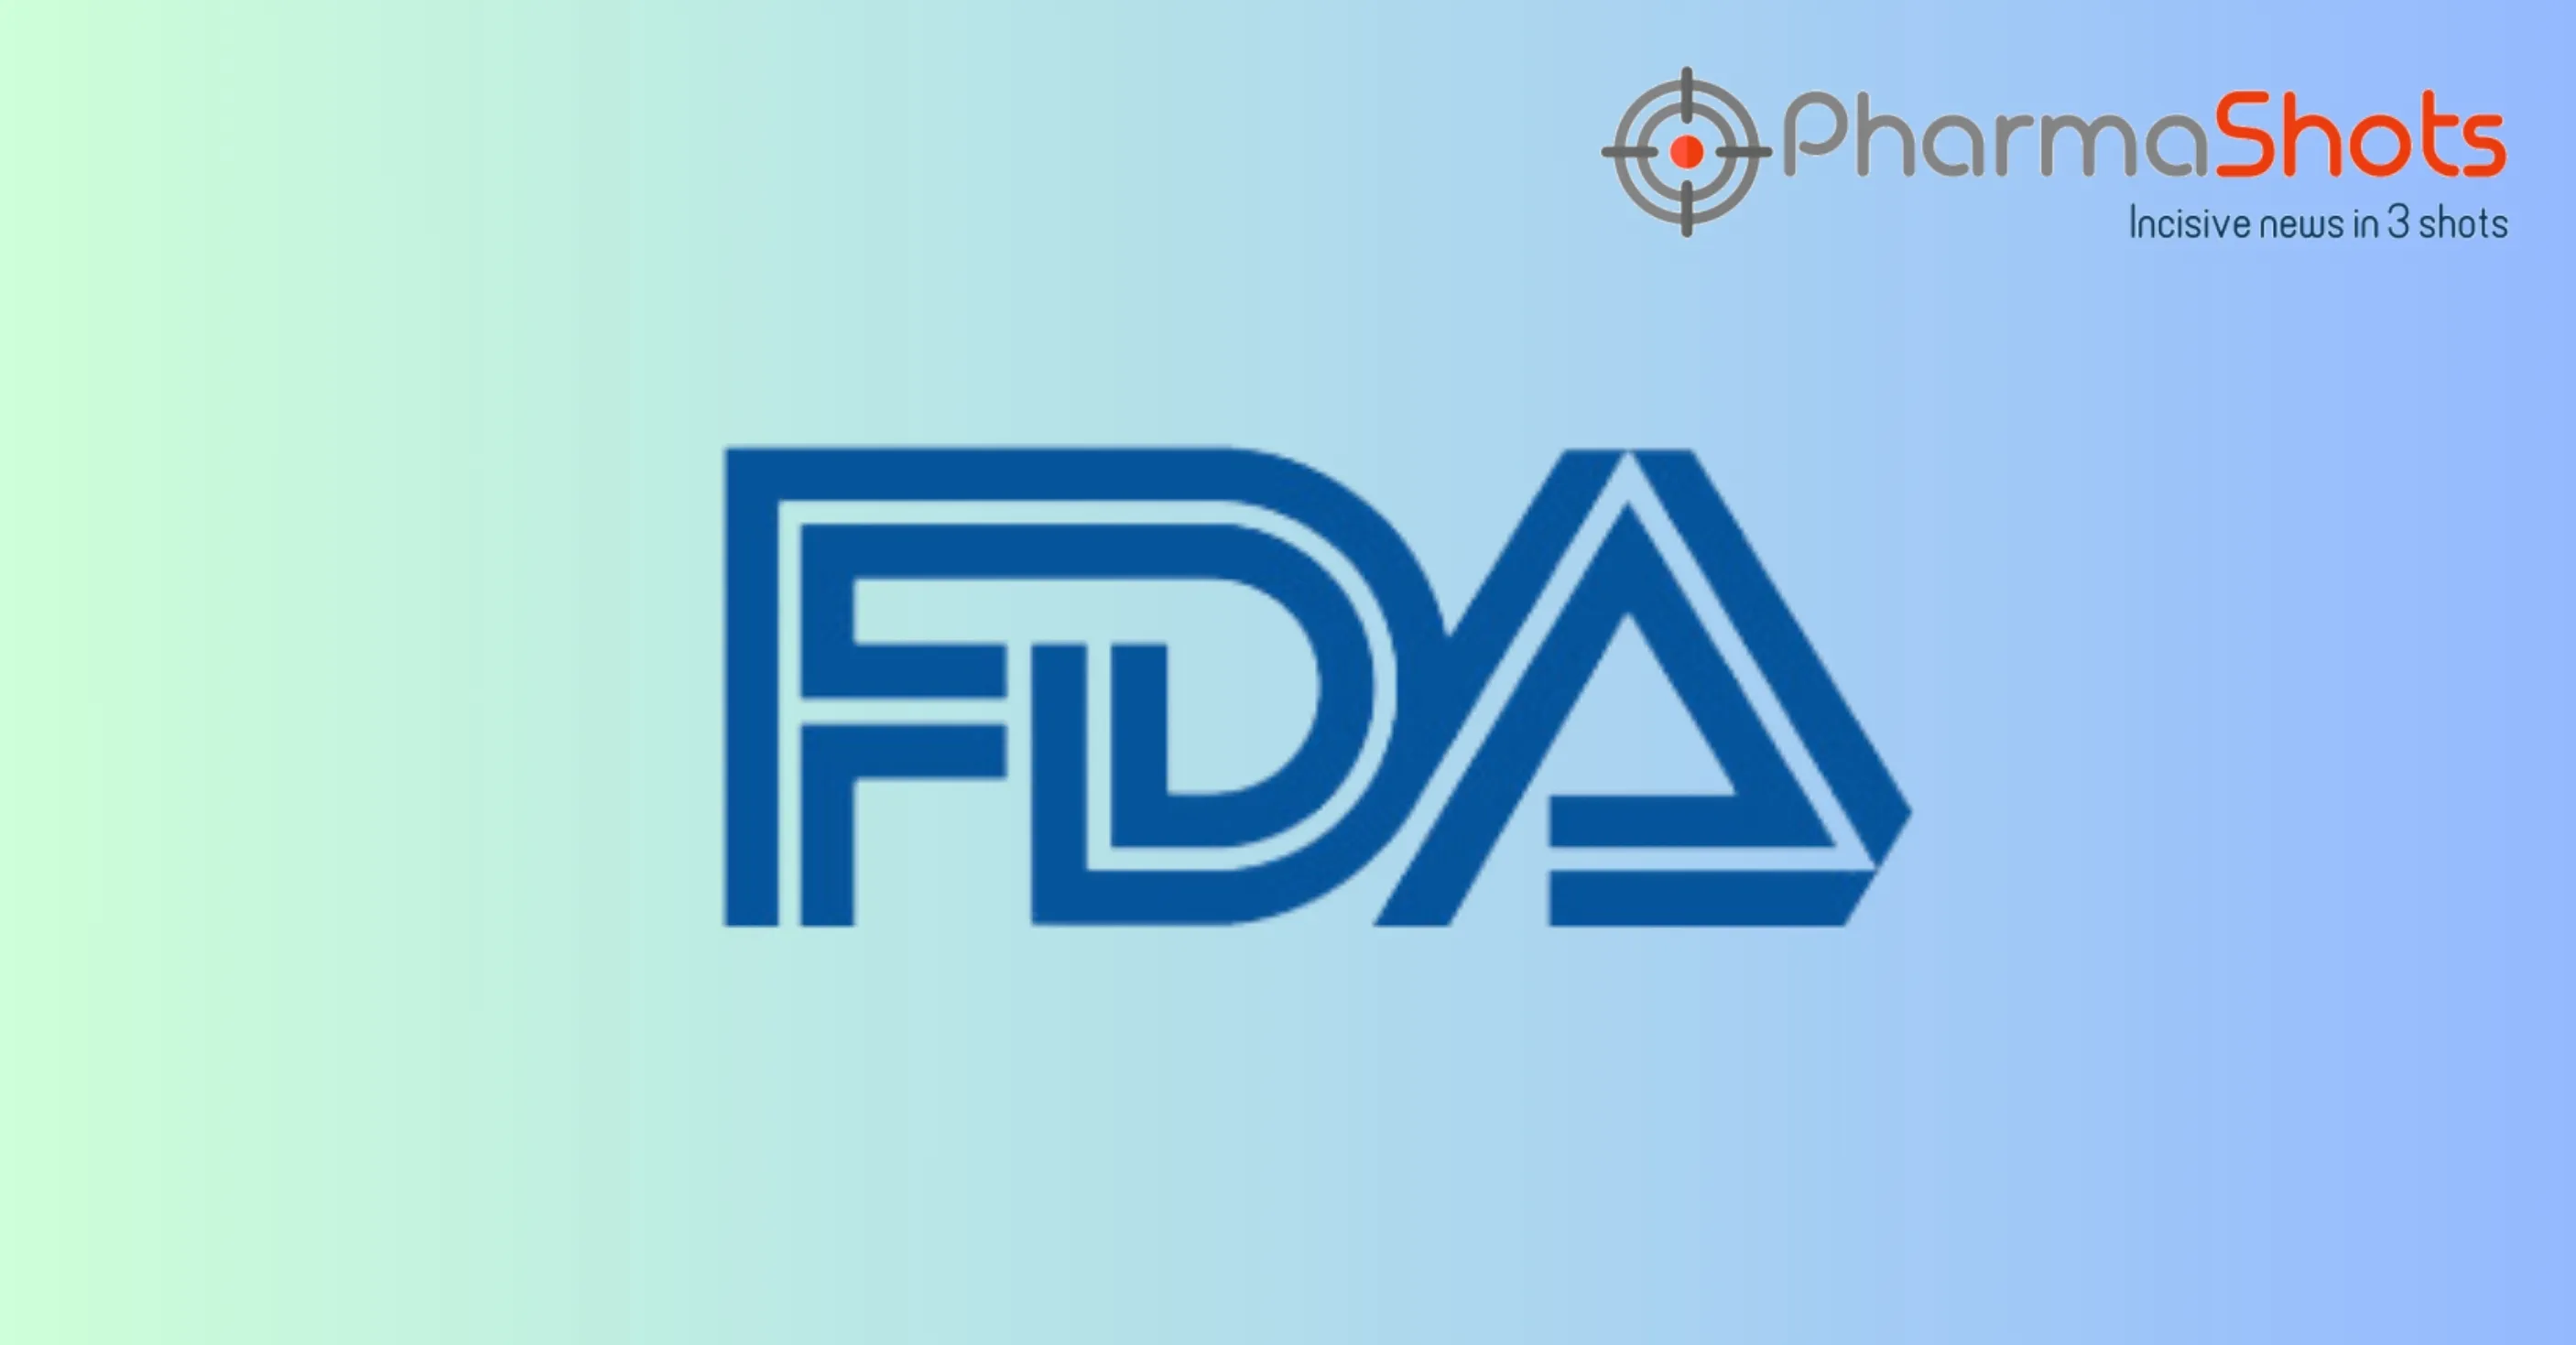 The US FDA Reclassifies Certain High-Risk IVDs